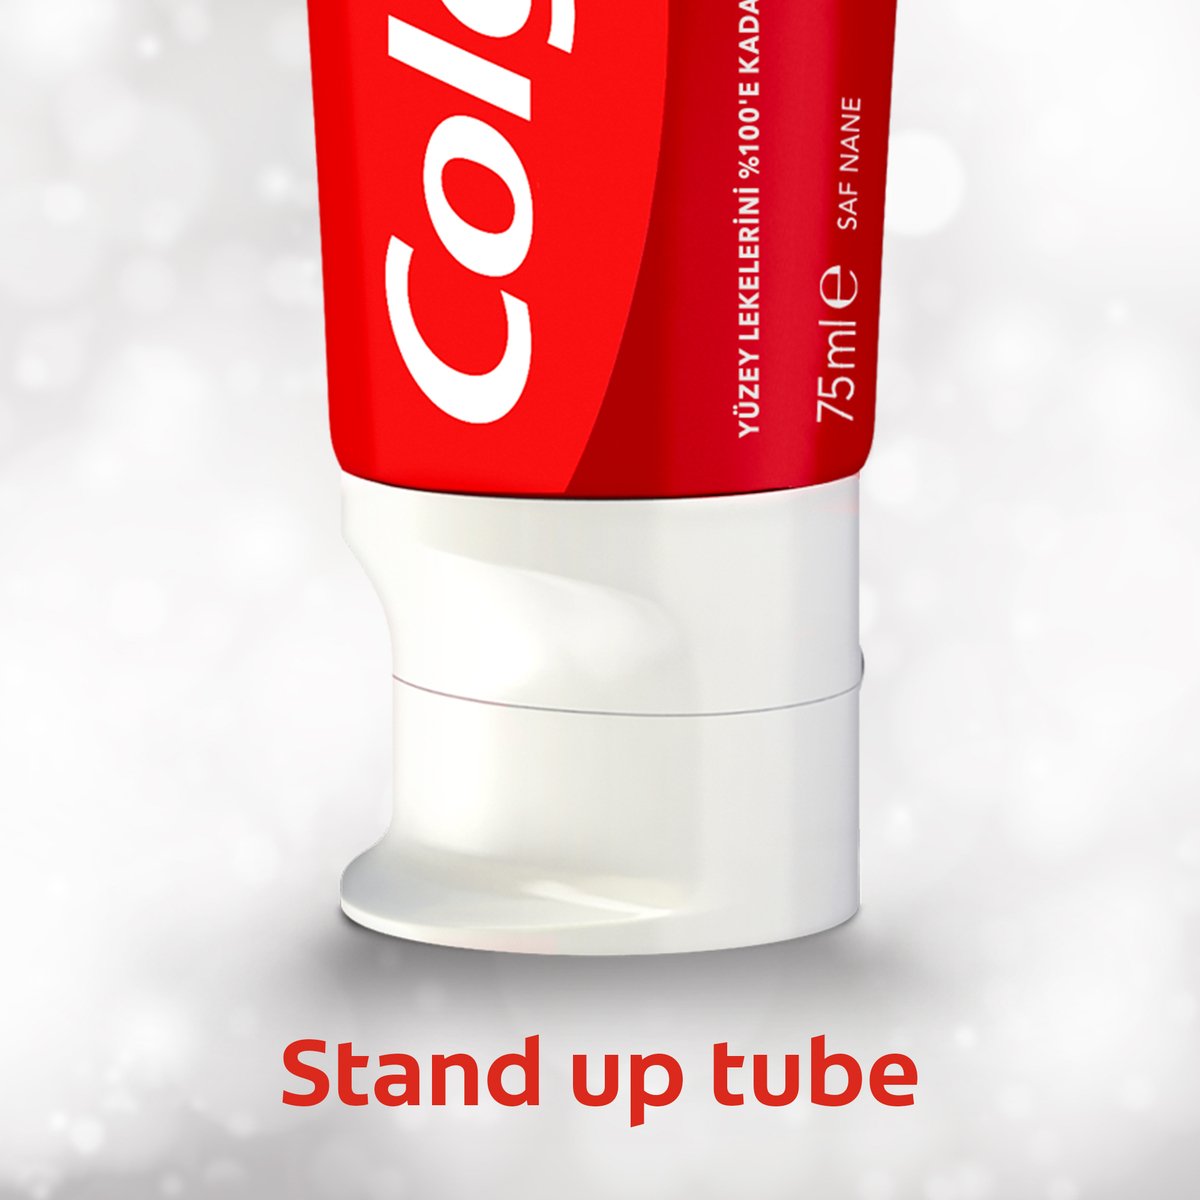 Colgate Fluoride Toothpaste Optic White Instant 75 ml